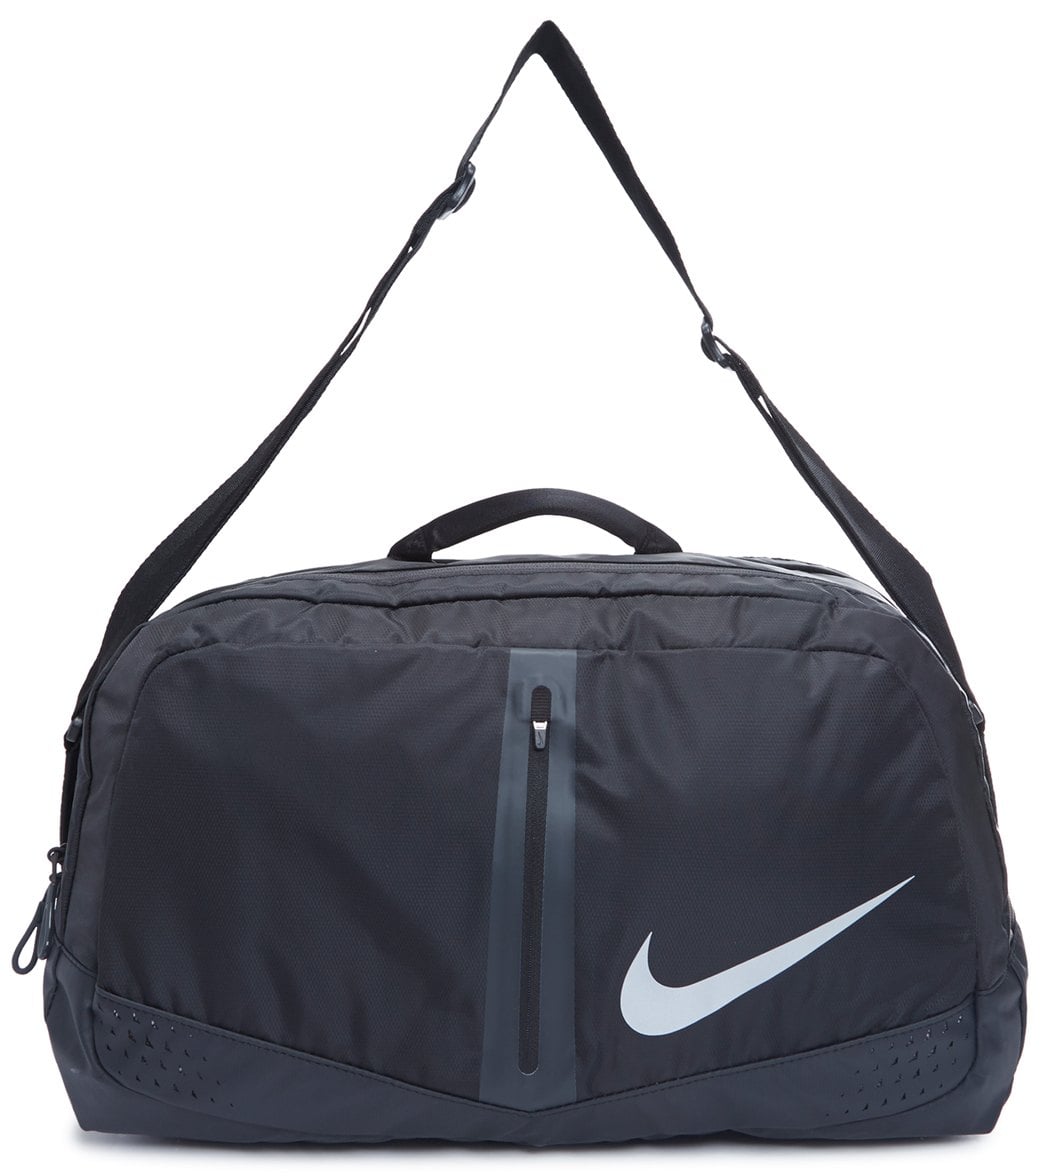 Nike Run Duffel Bag 34 Large - Black/Anthracite/Silver - Swimoutlet.com